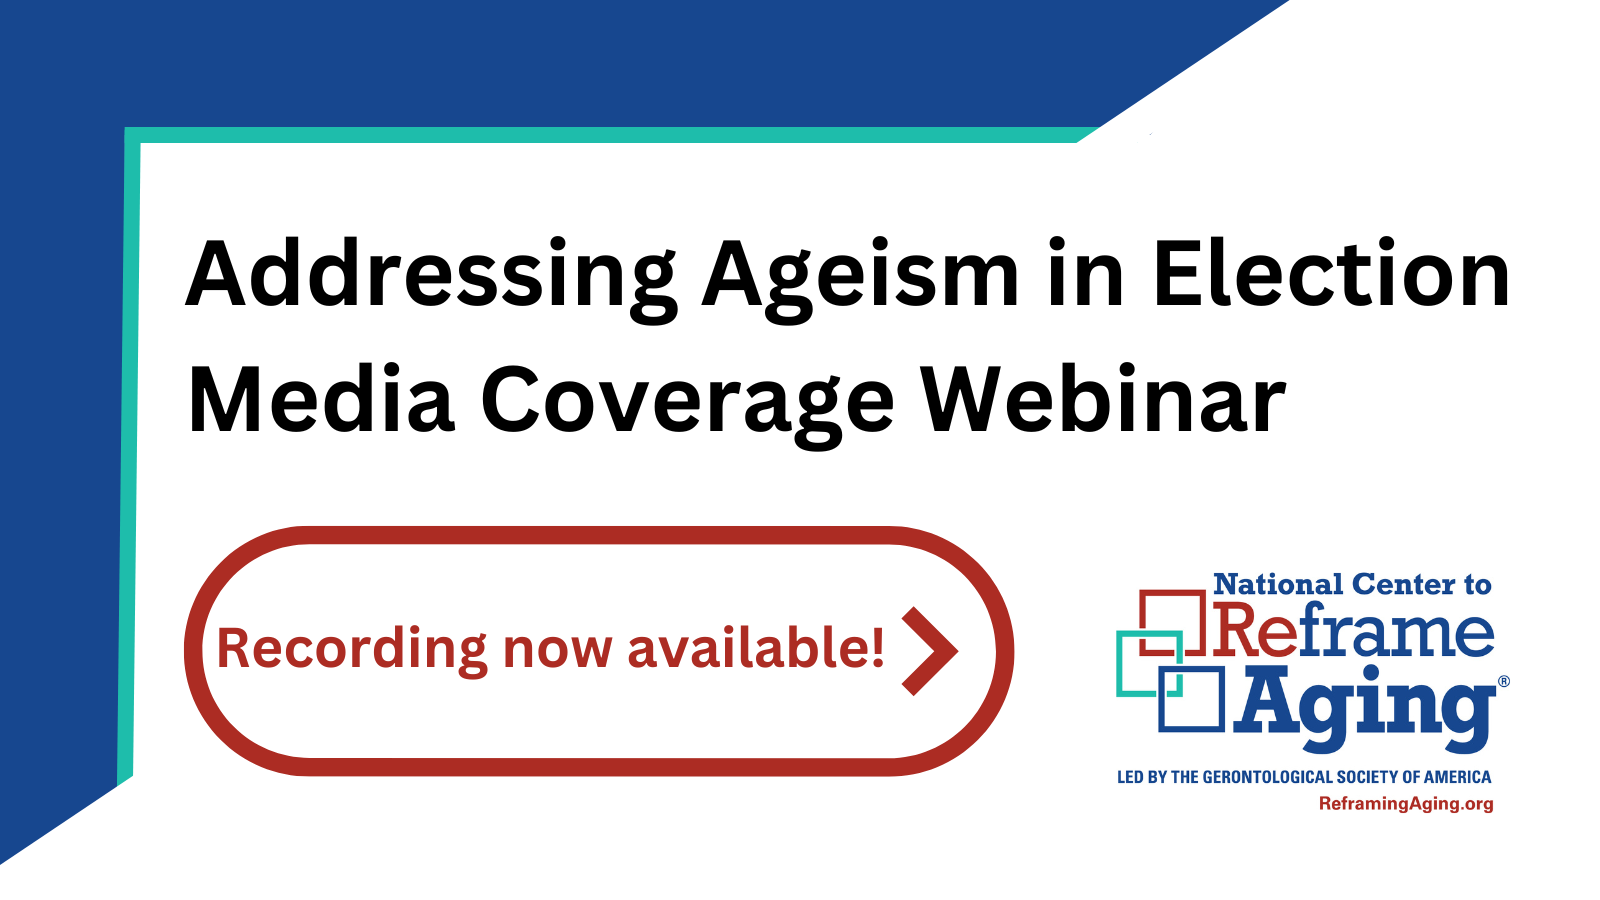 Addressing Ageism in Election Media Coverage Webinar